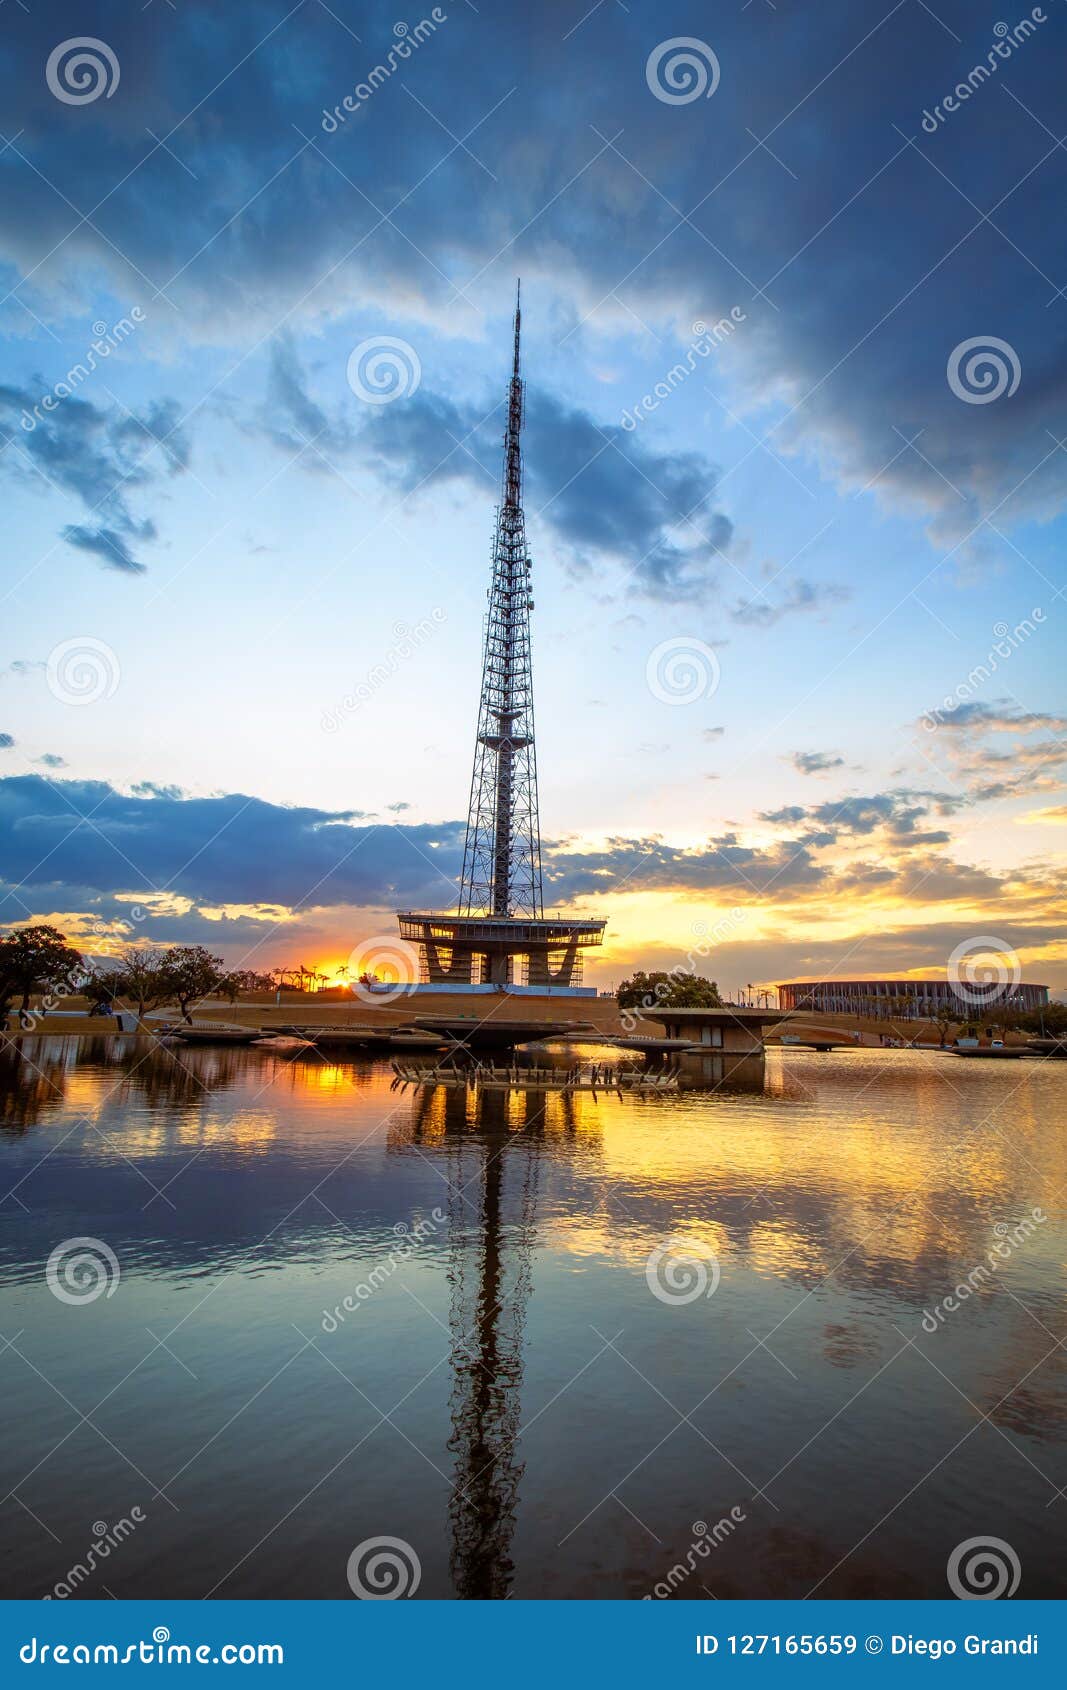 brasilia tv tower at sunset - brasilia, distrito federal, brazil